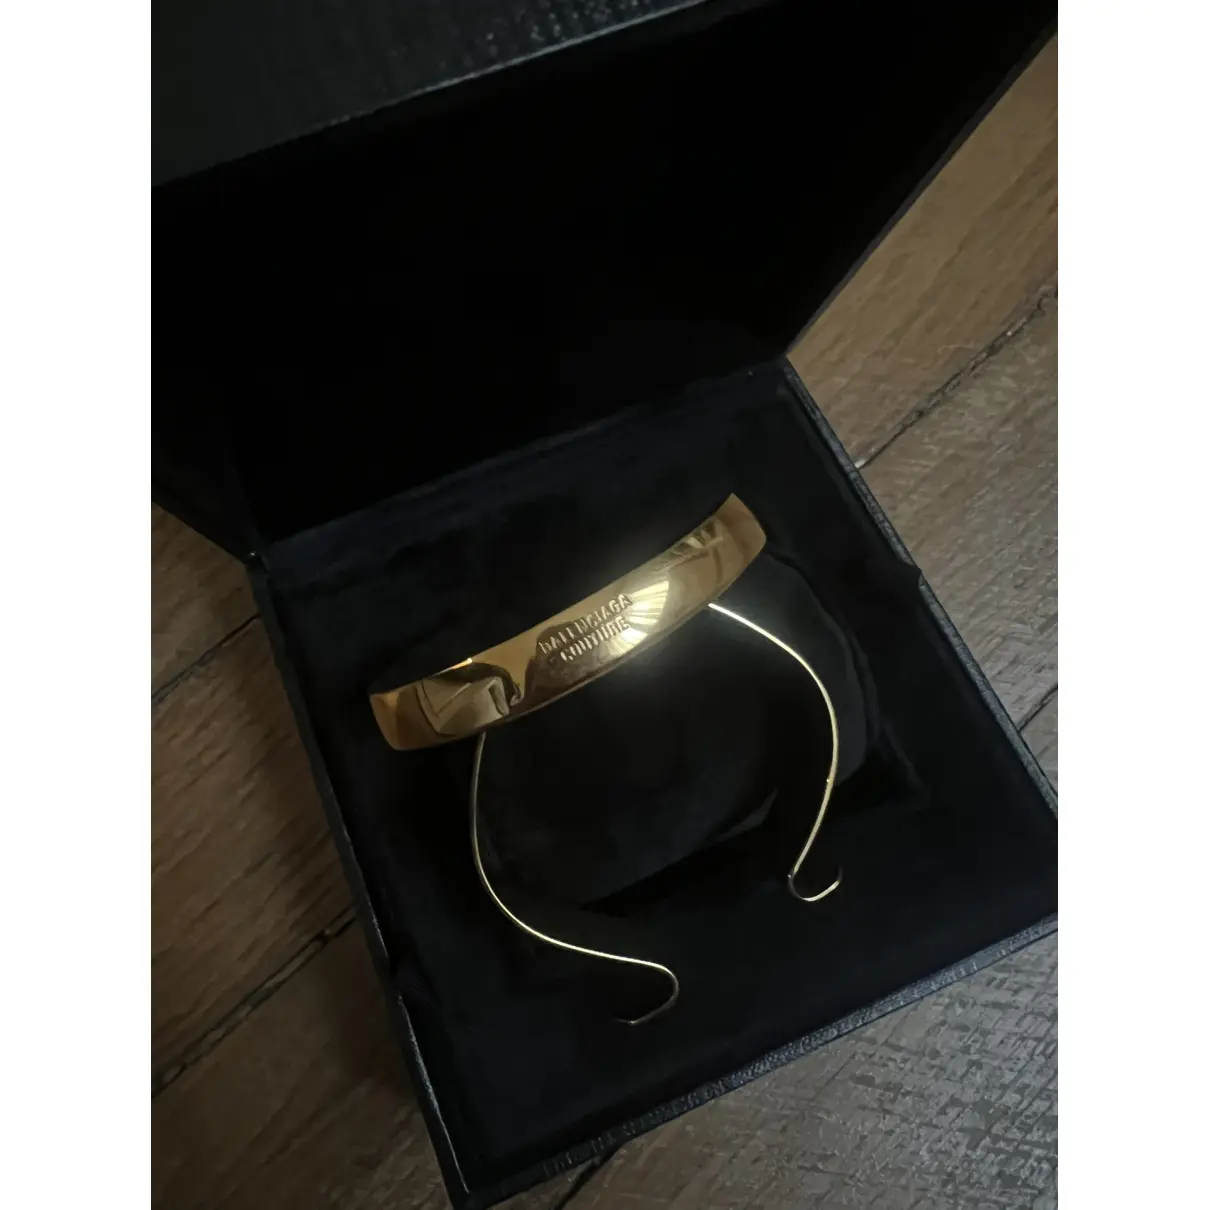 Buy Balenciaga Yellow gold bracelet online